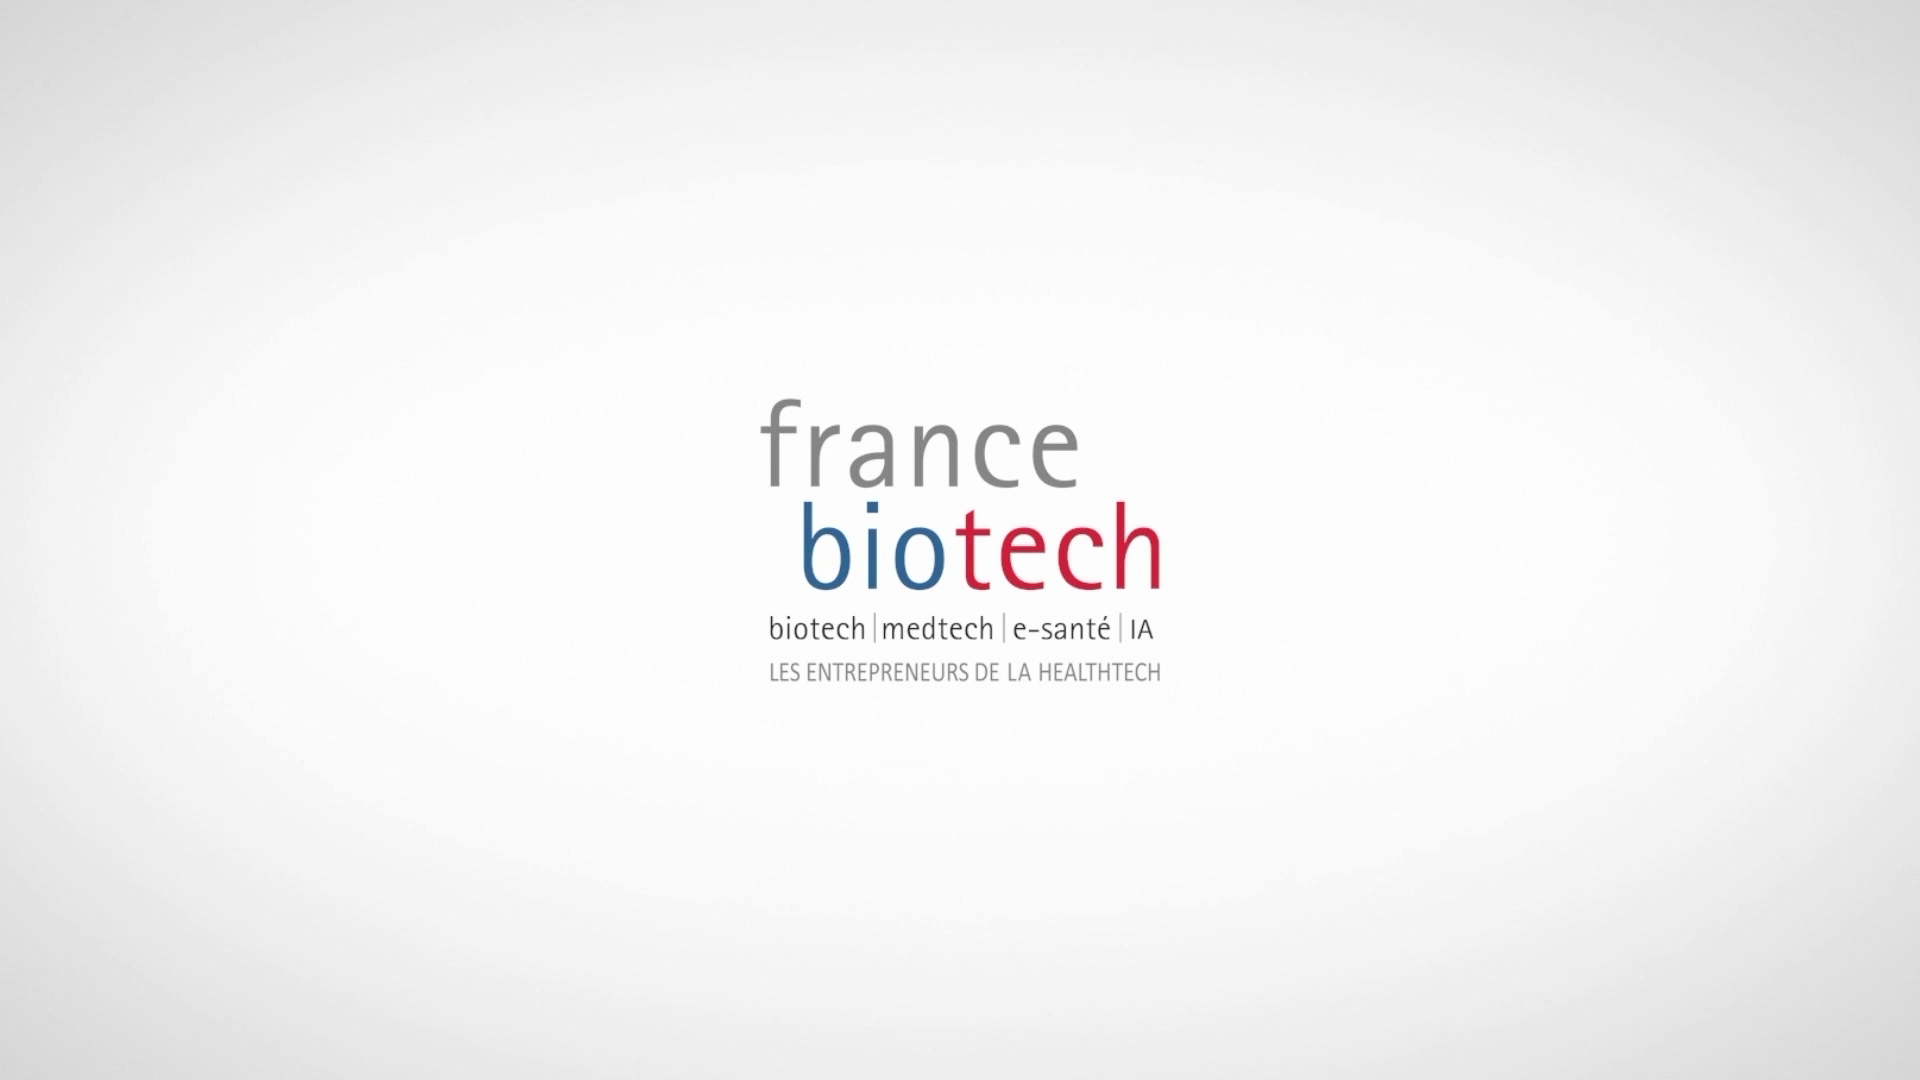 FranceBiotech intervention